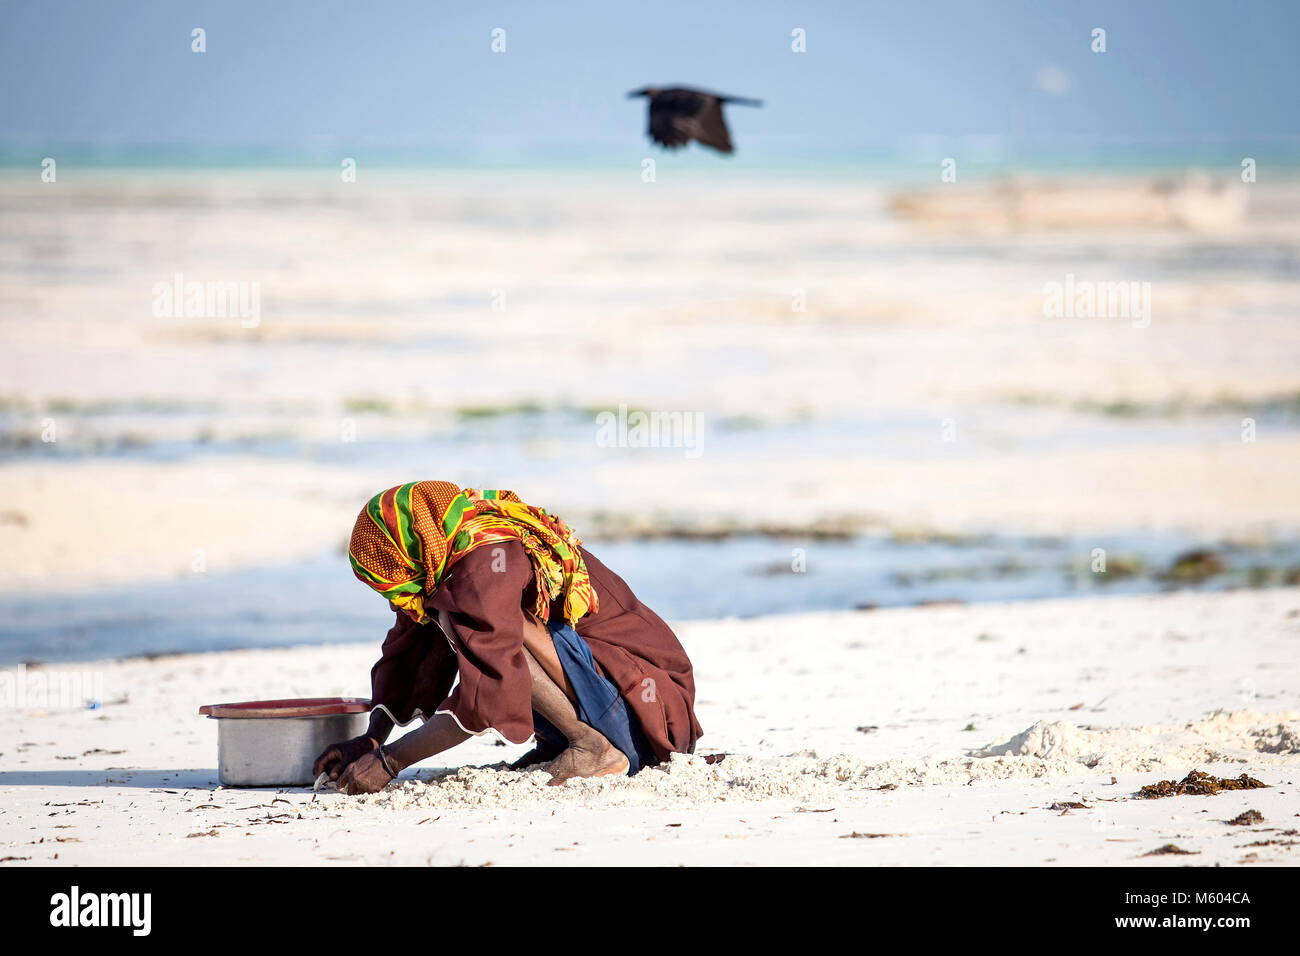 Muslim man gathering molluscs on beach in Stone Town, Zanzibar Island, Tanzania. Zanzibar daily life. Crow flying in background. Stock Photo